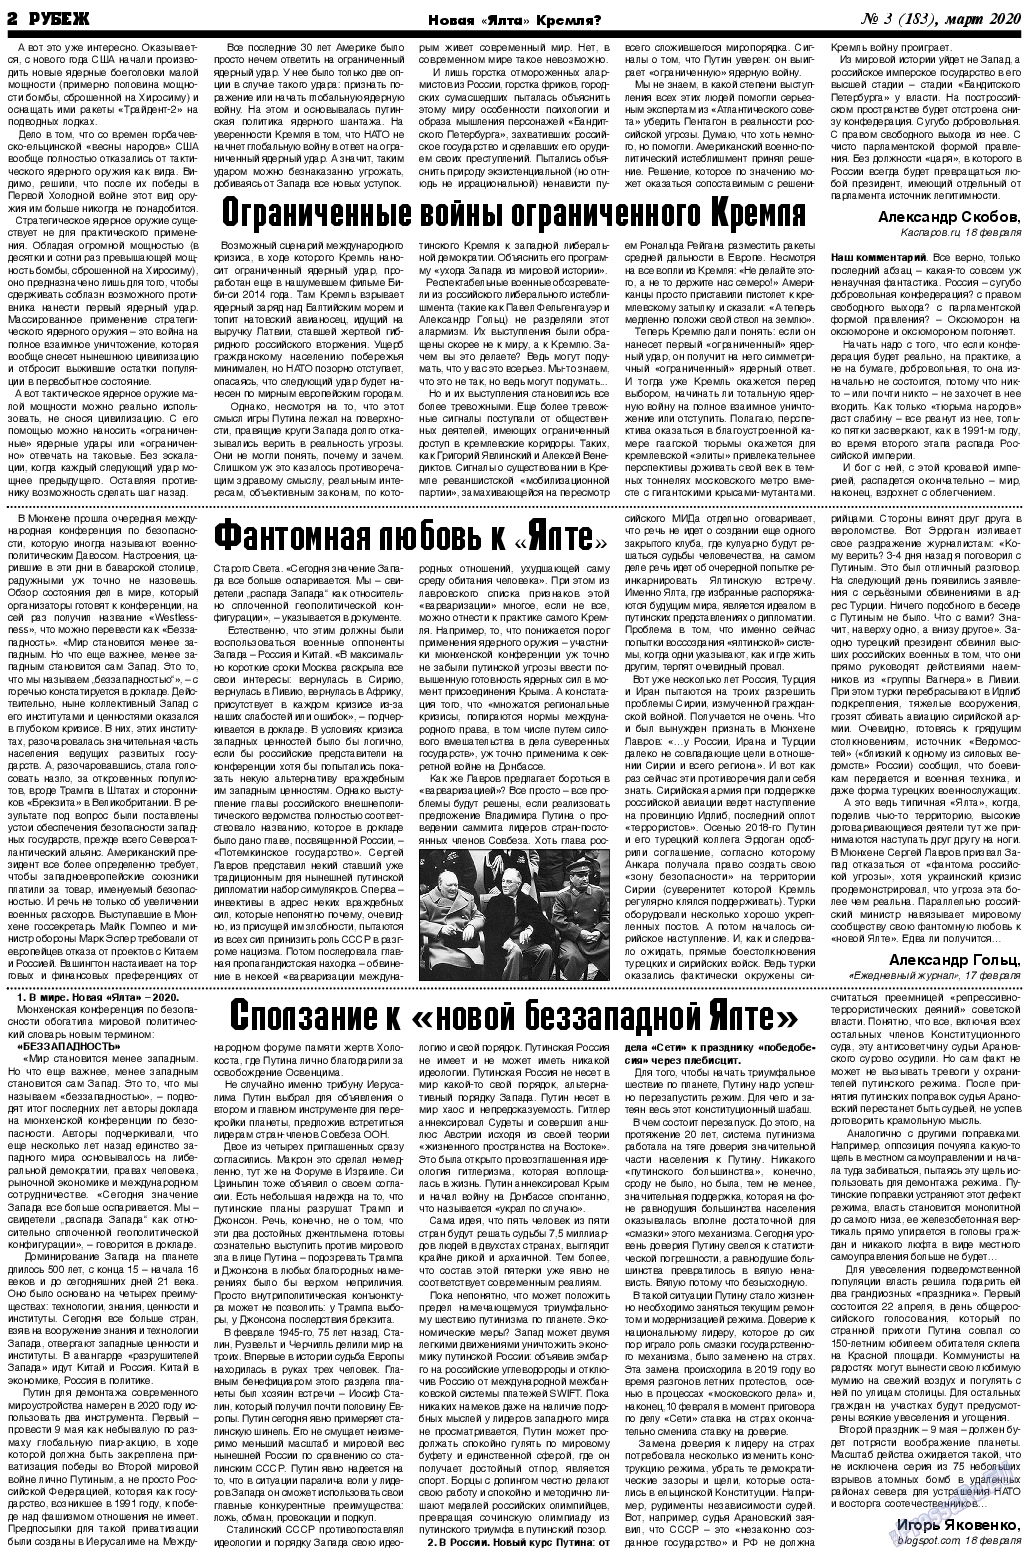 Рубеж, газета. 2020 №3 стр.2